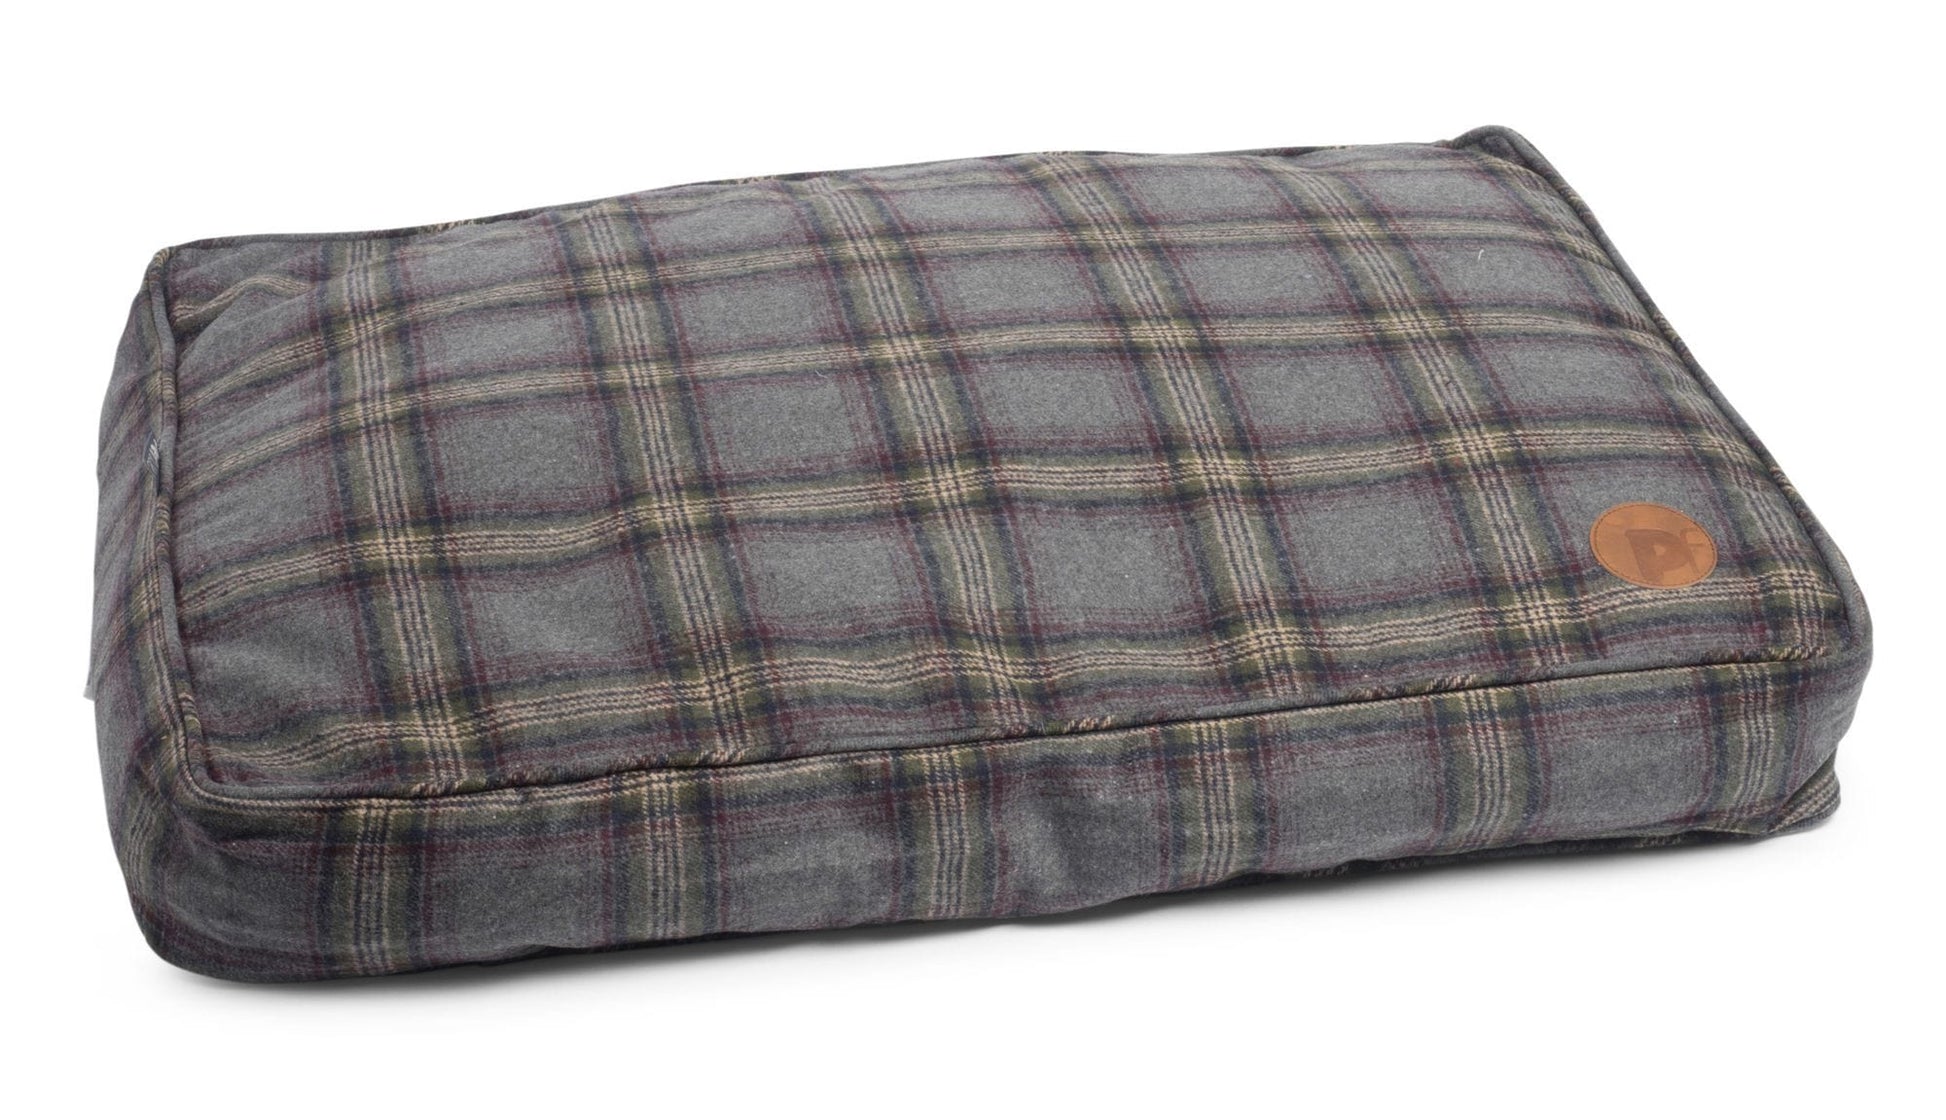 Petface pillow mattress dog bed, medium size grey tweed pattern.